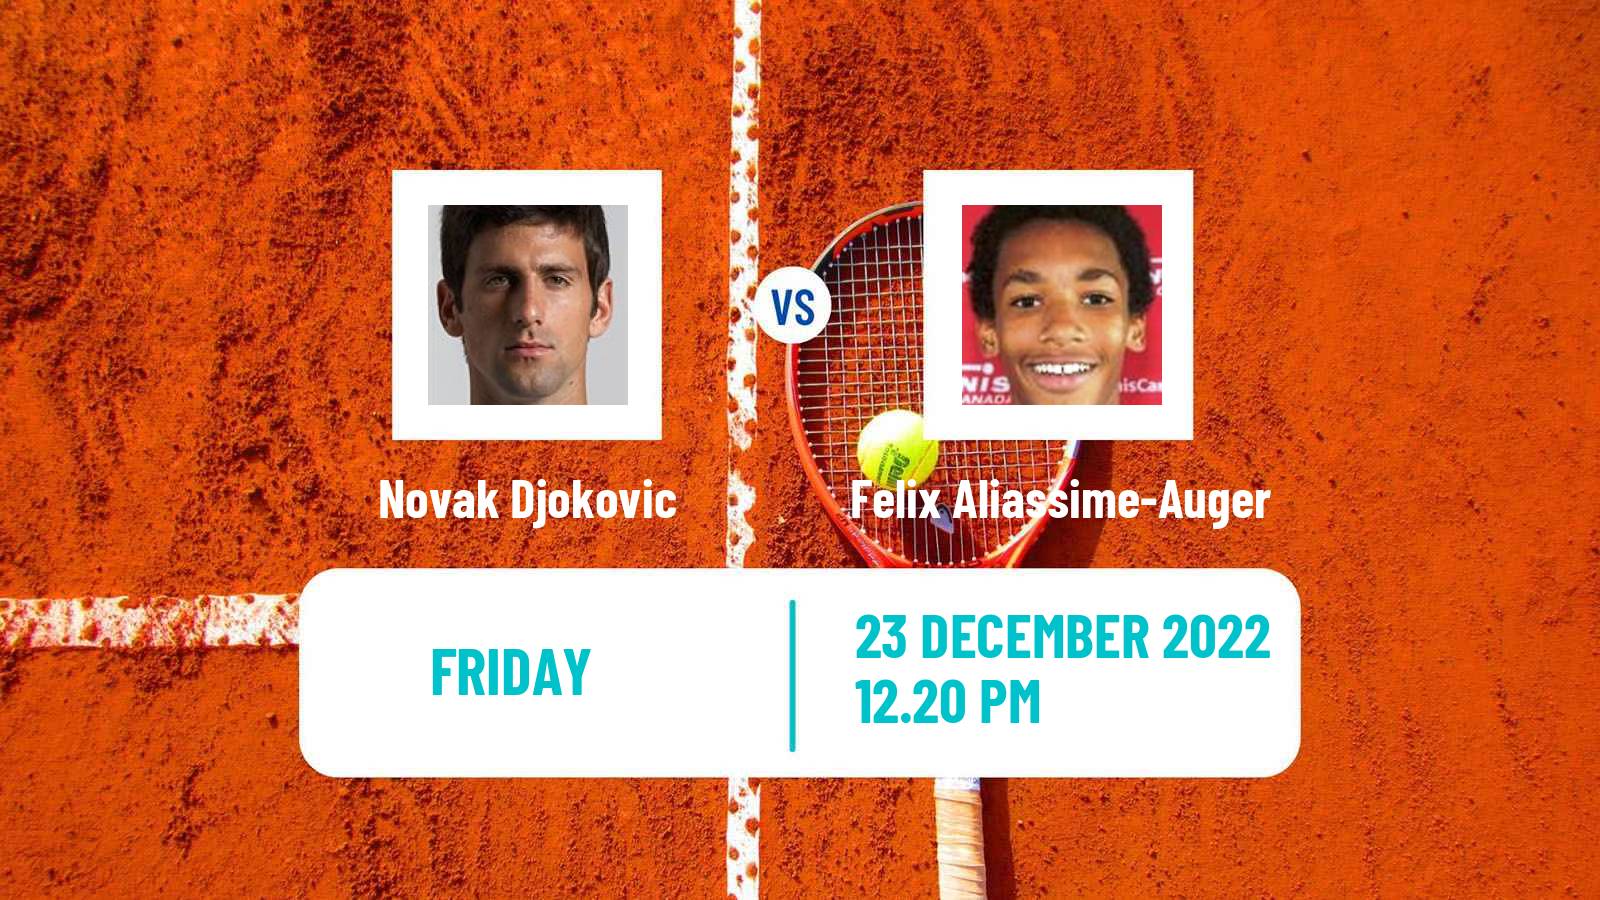 Tennis Exhibition World Tennis League Novak Djokovic - Felix Aliassime-Auger